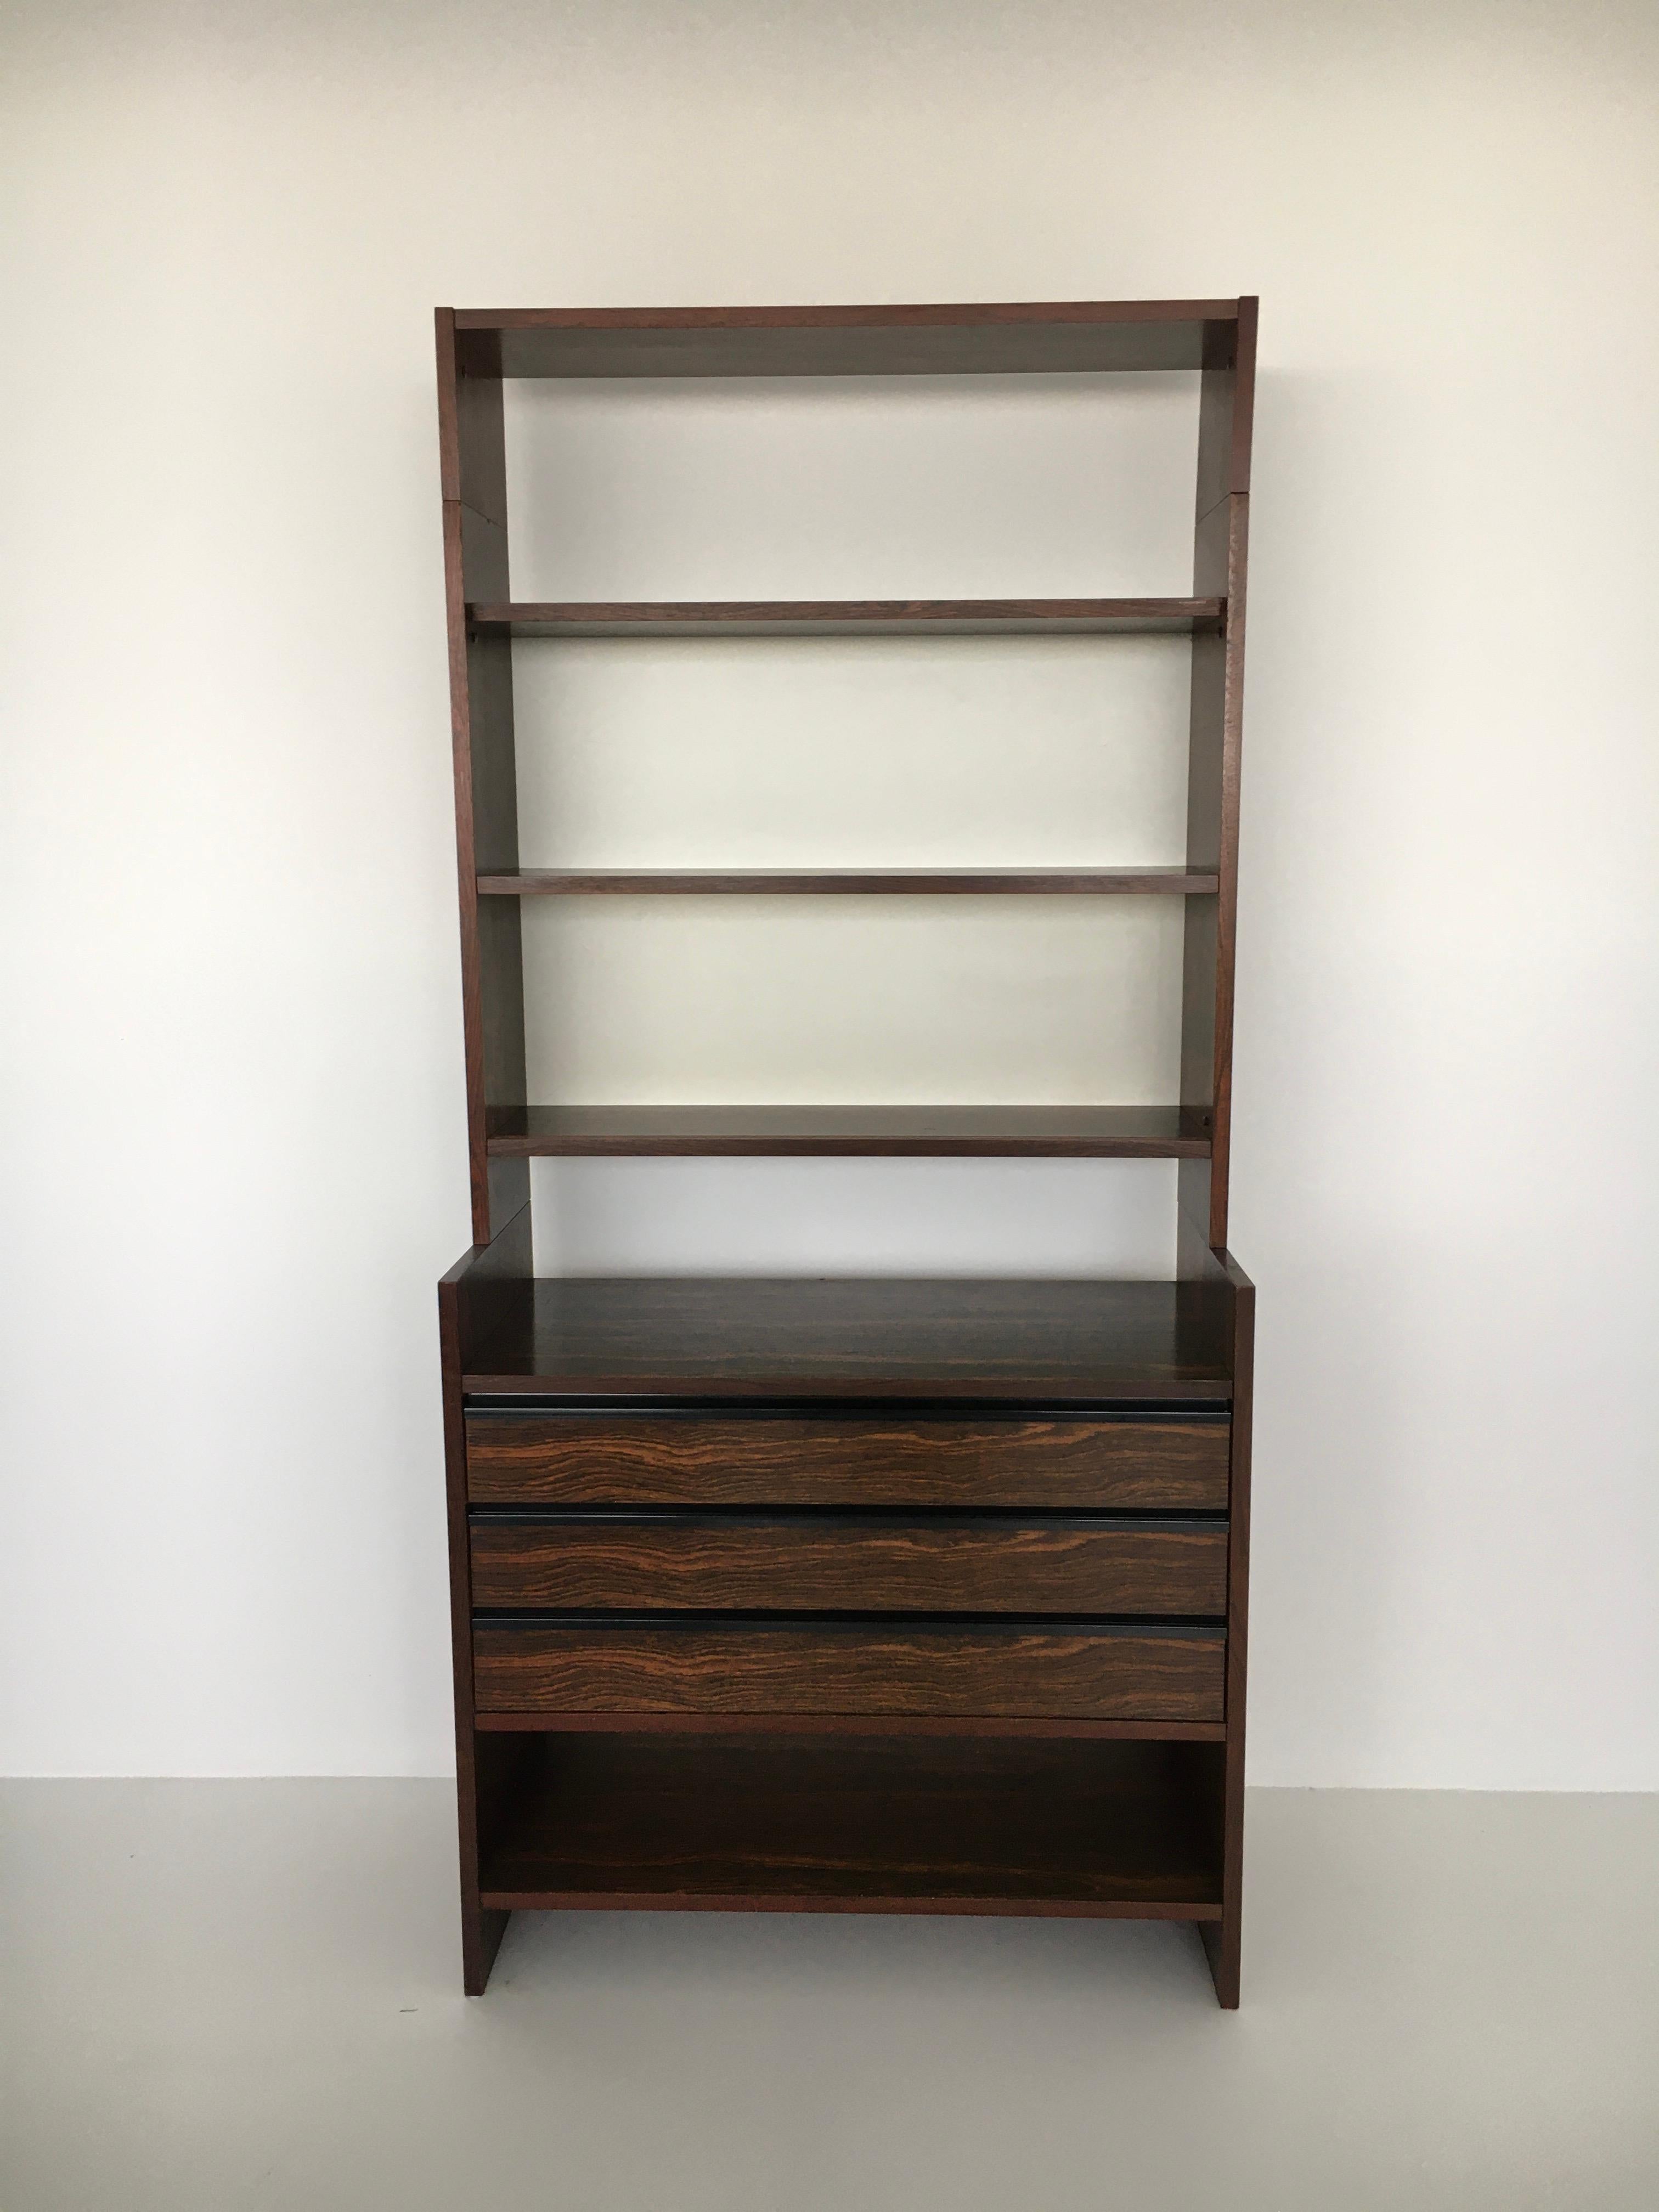 Poul Cadovius for klm rosewood cabinet, 1970’s

Dimensions: 178cm H, 84cm W, 24cmD top , 40cm D bottom
Designer: Poul Cadovius
Period: 1960’s
Condition: Good